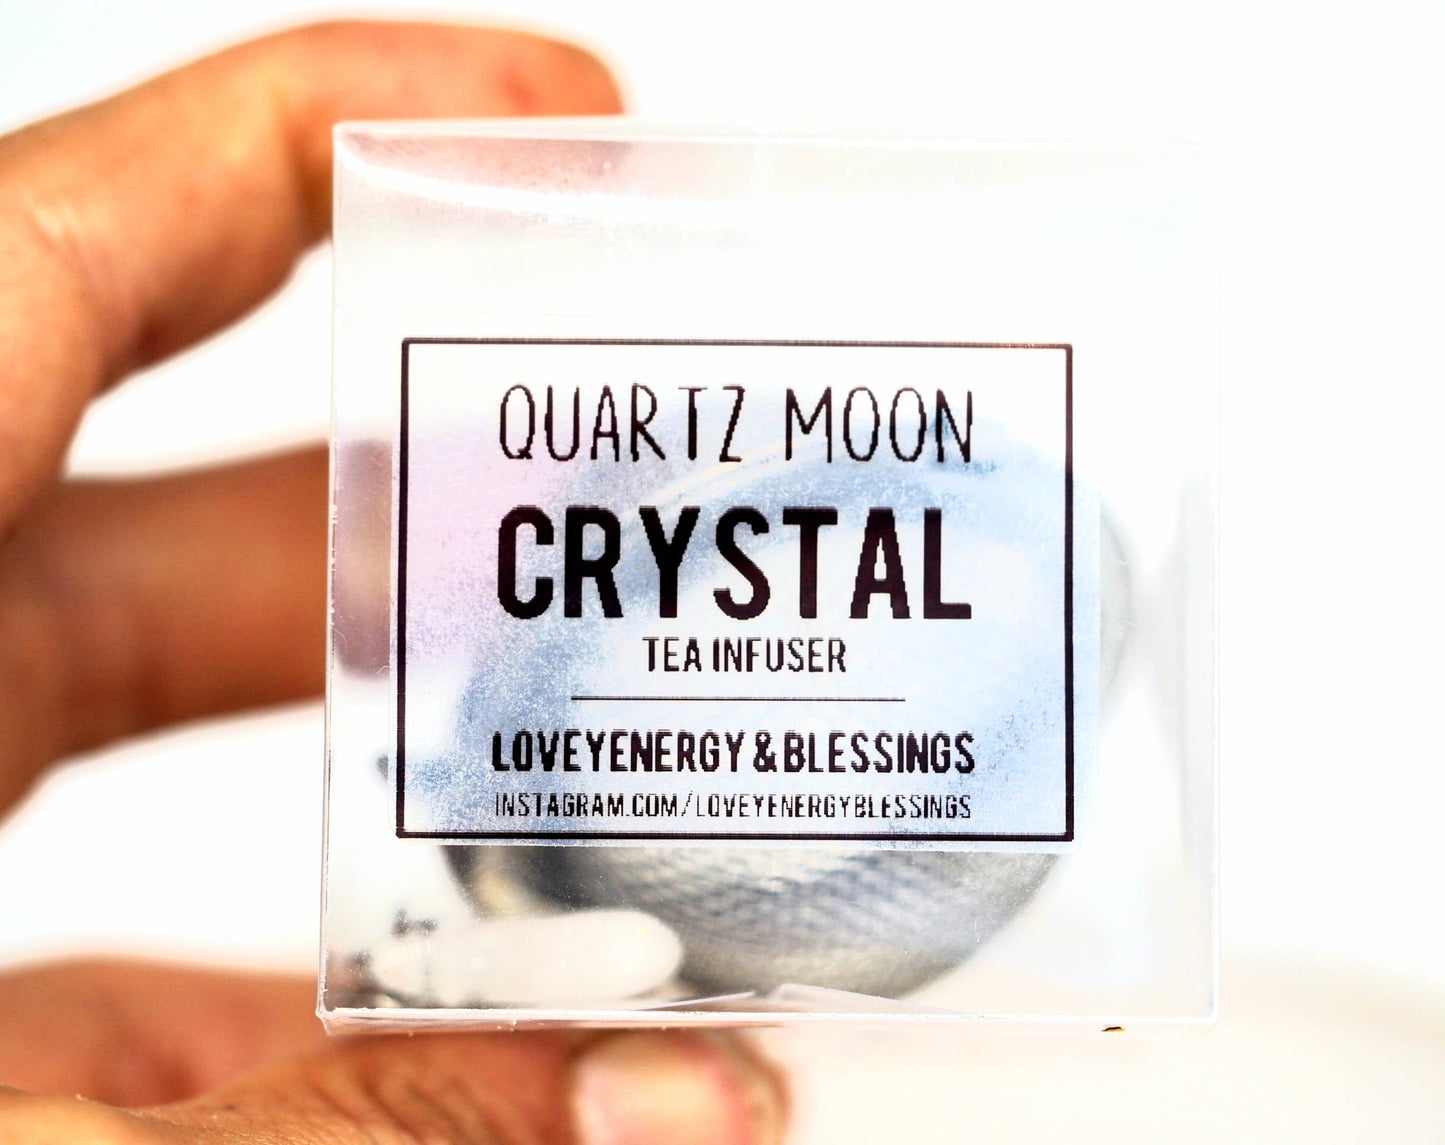 Loveyenergy & Blessings - Quartz Crescent Moon Crystal Tea Infuser, Loose Leaf